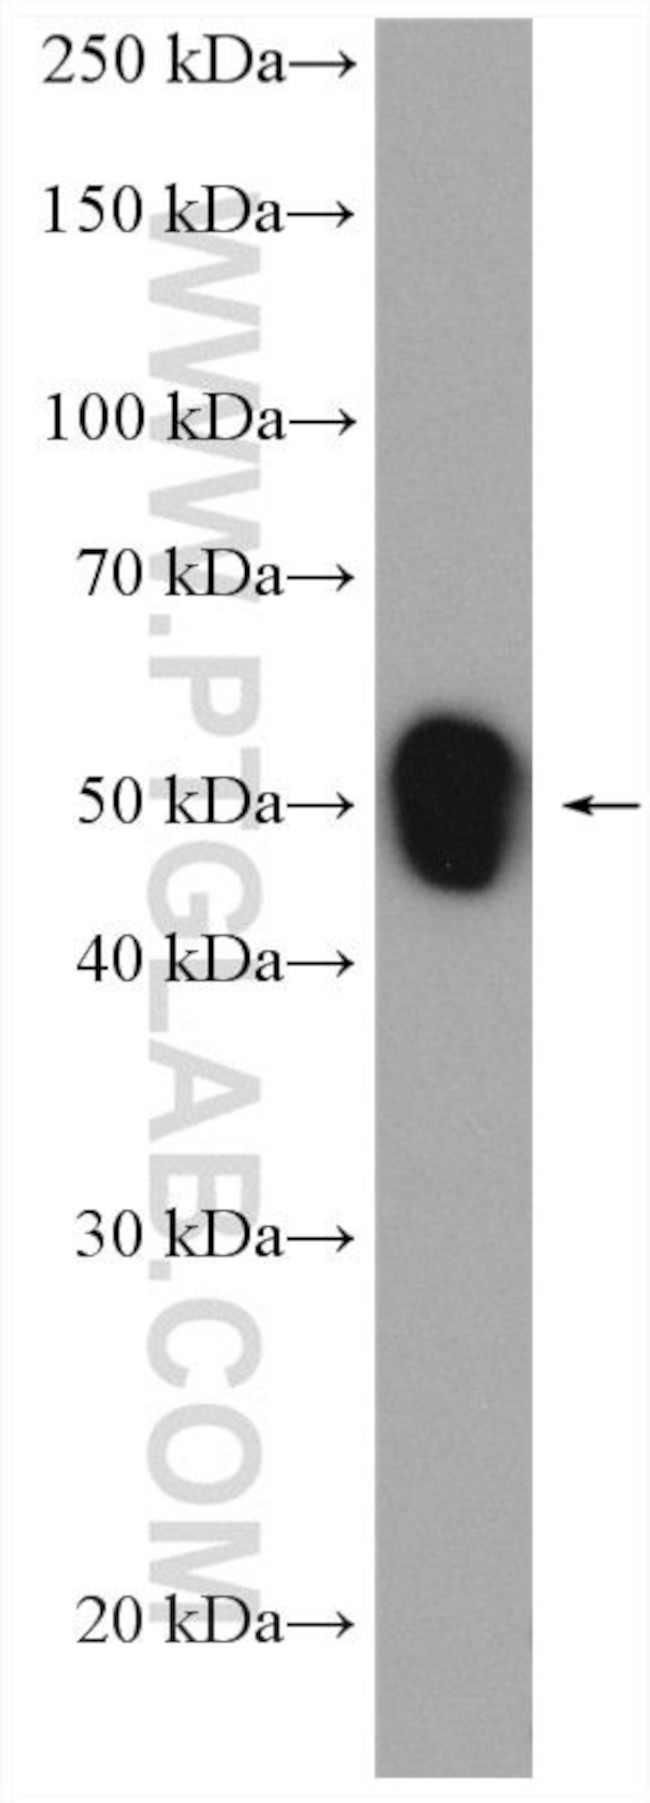 TACSTD2/TROP2 Antibody in Western Blot (WB)